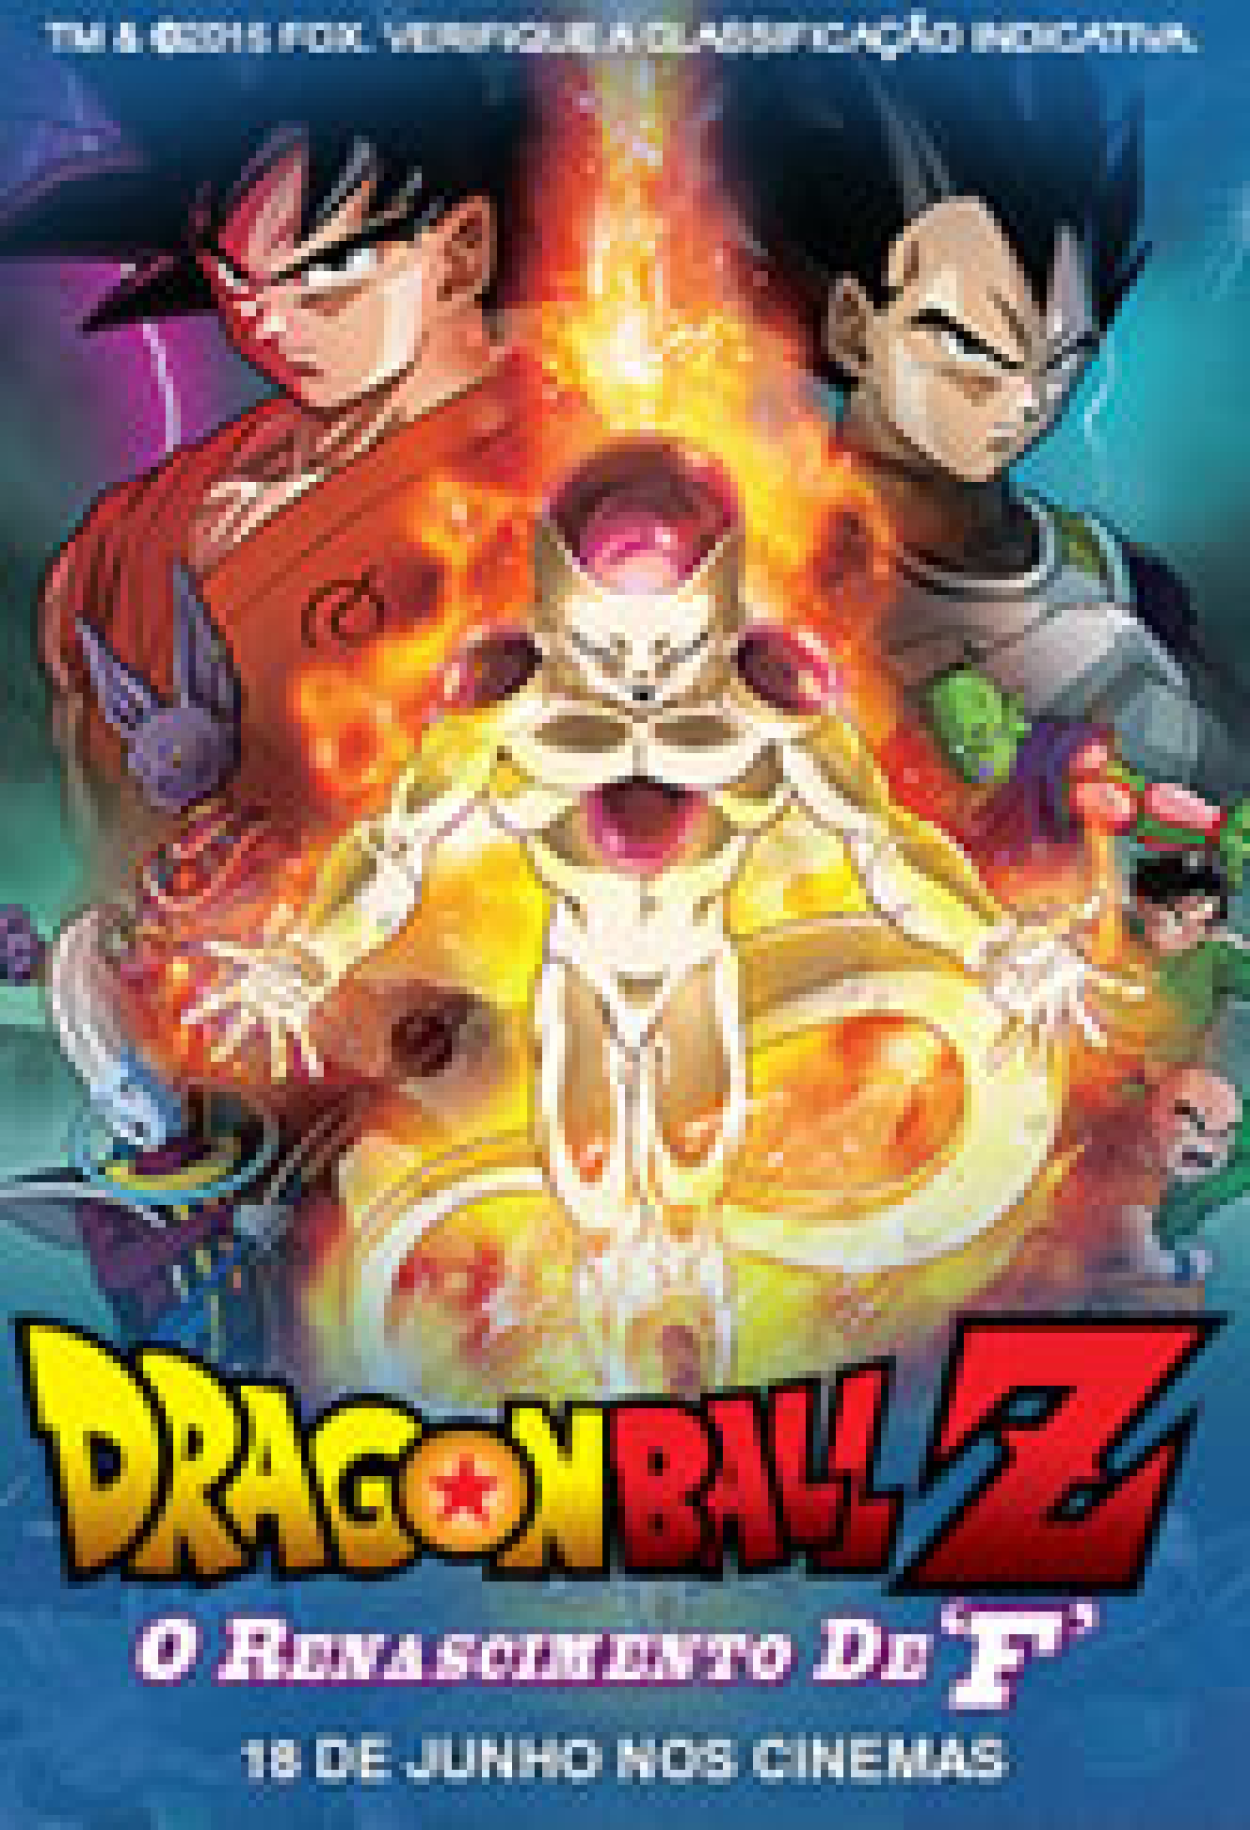 Dragon Ball Z e Super - Lista completa de filmes